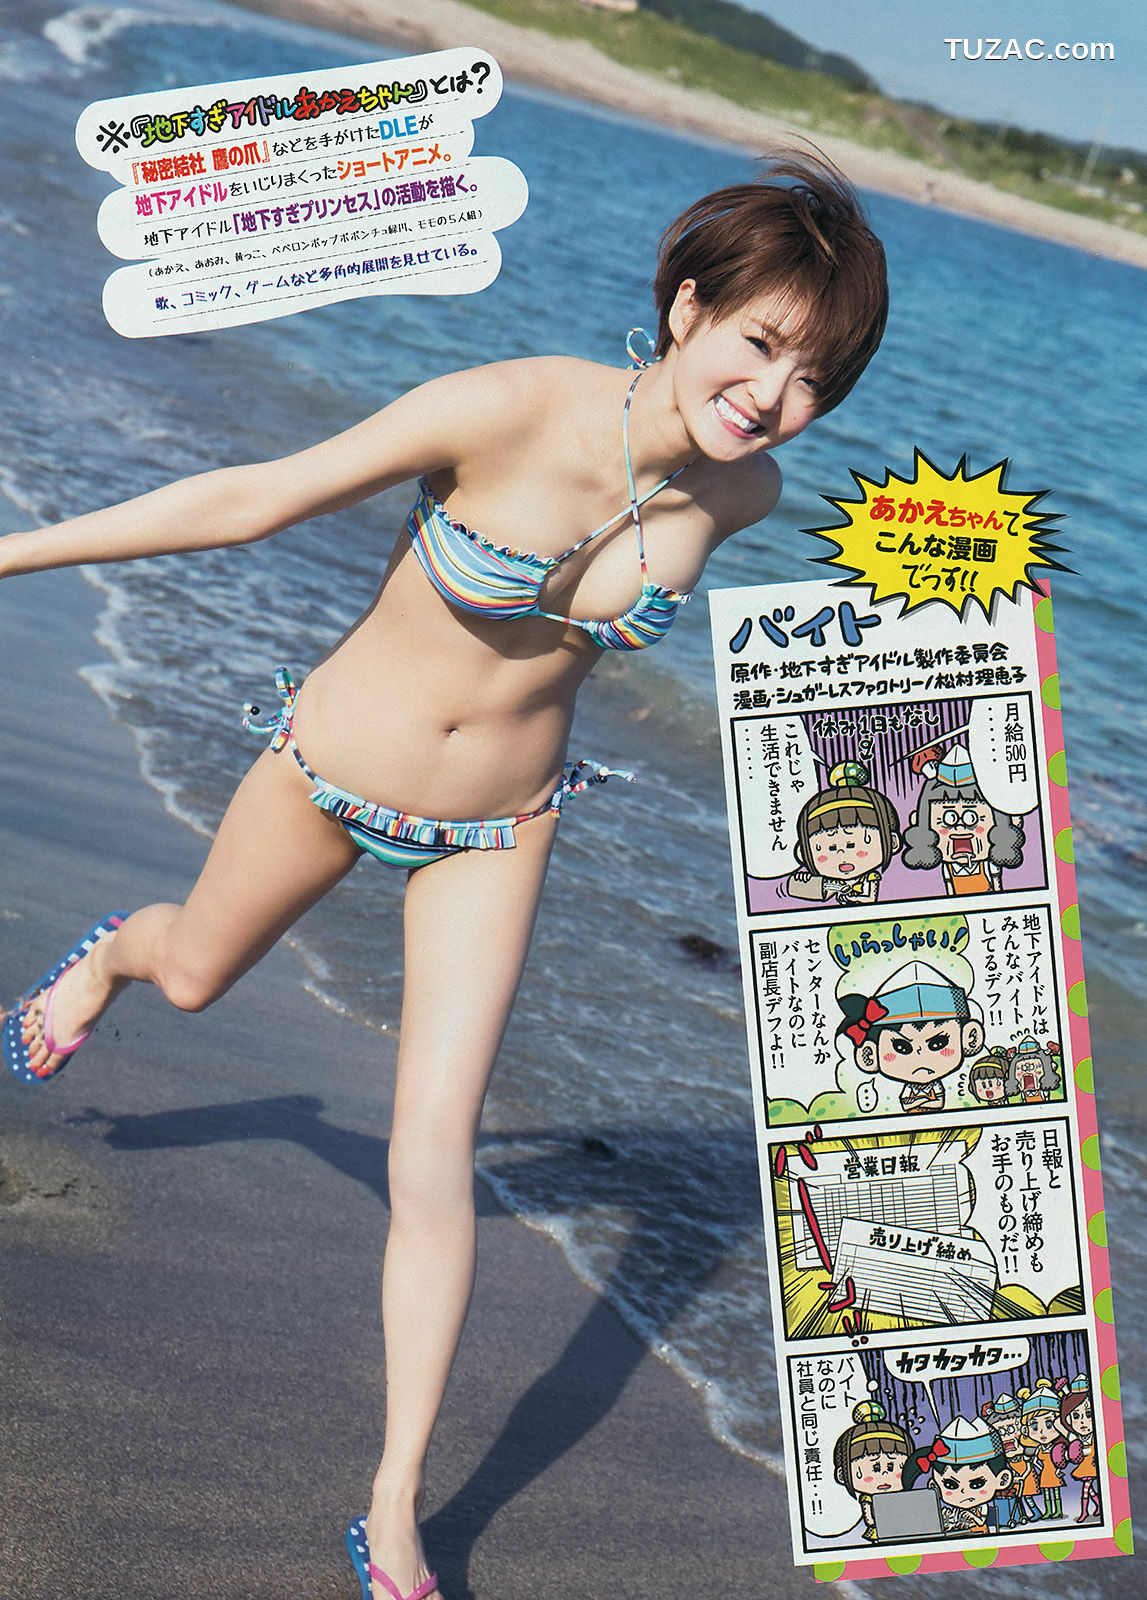 Young Magazine杂志写真_ 小嶋陽菜 久保ユリカ 2014年No.30 写真杂志[12P]